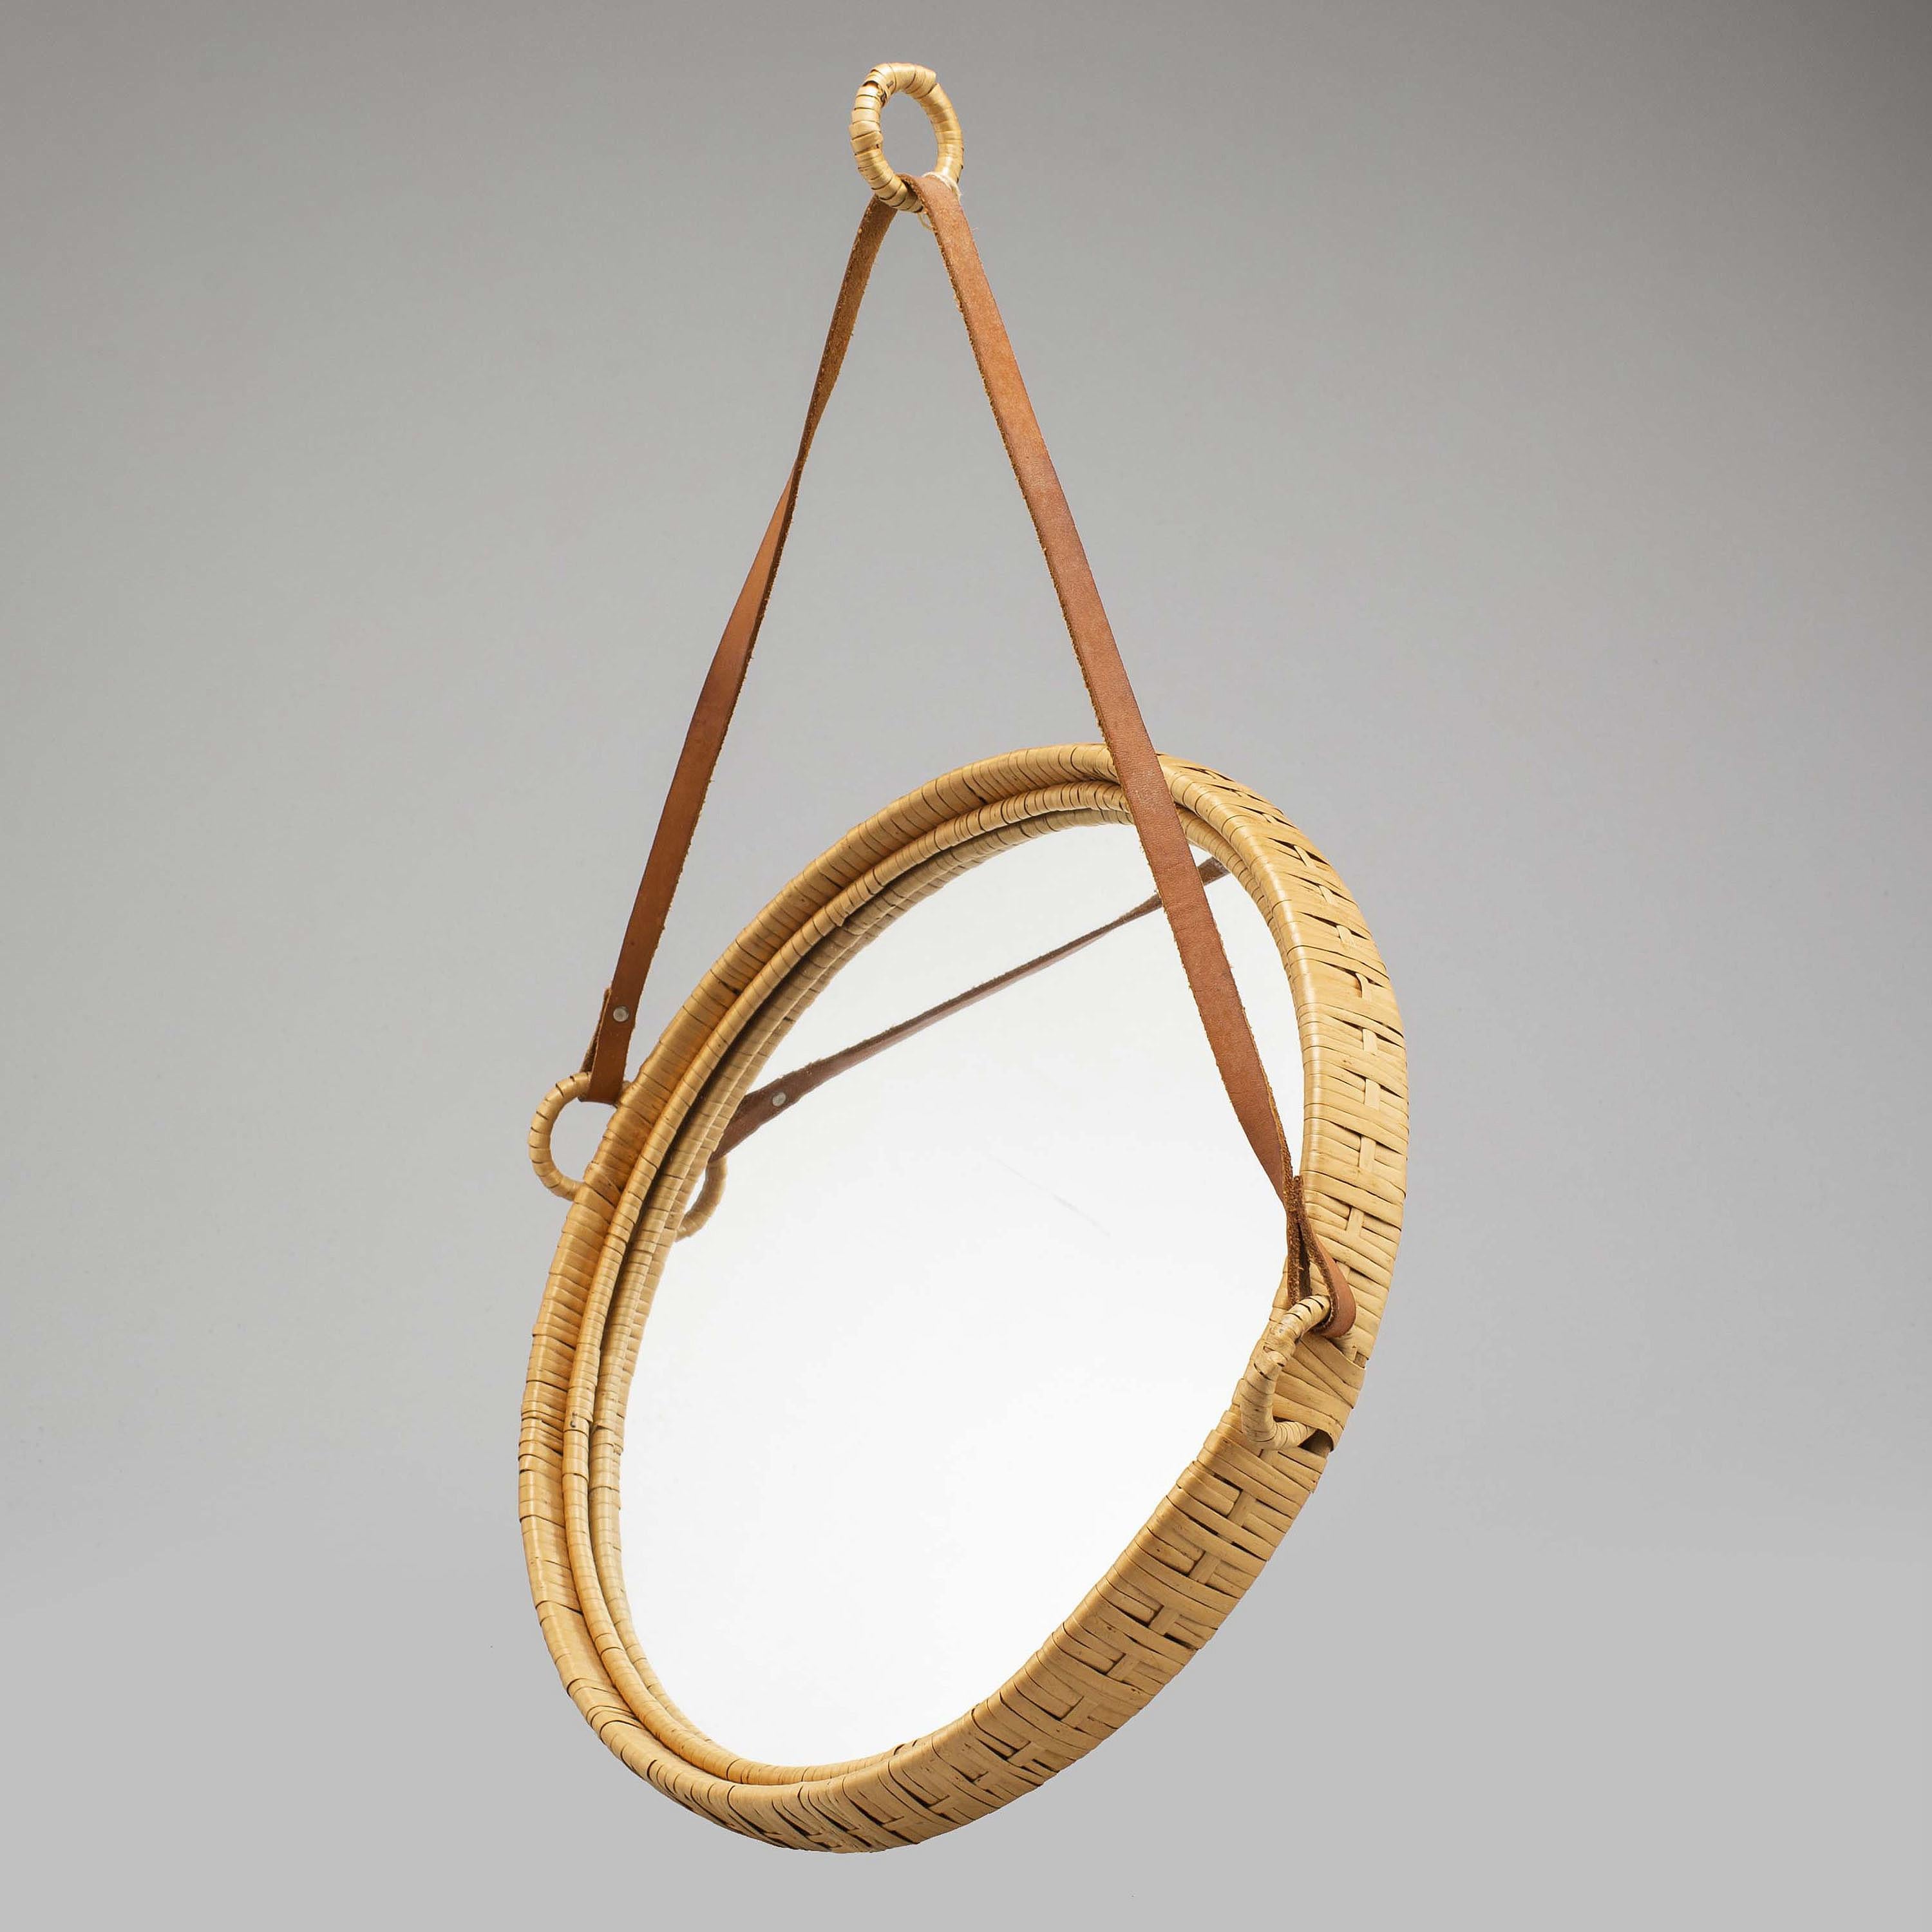 Mirror, rattan, Sweden, 1960s, leather strap.